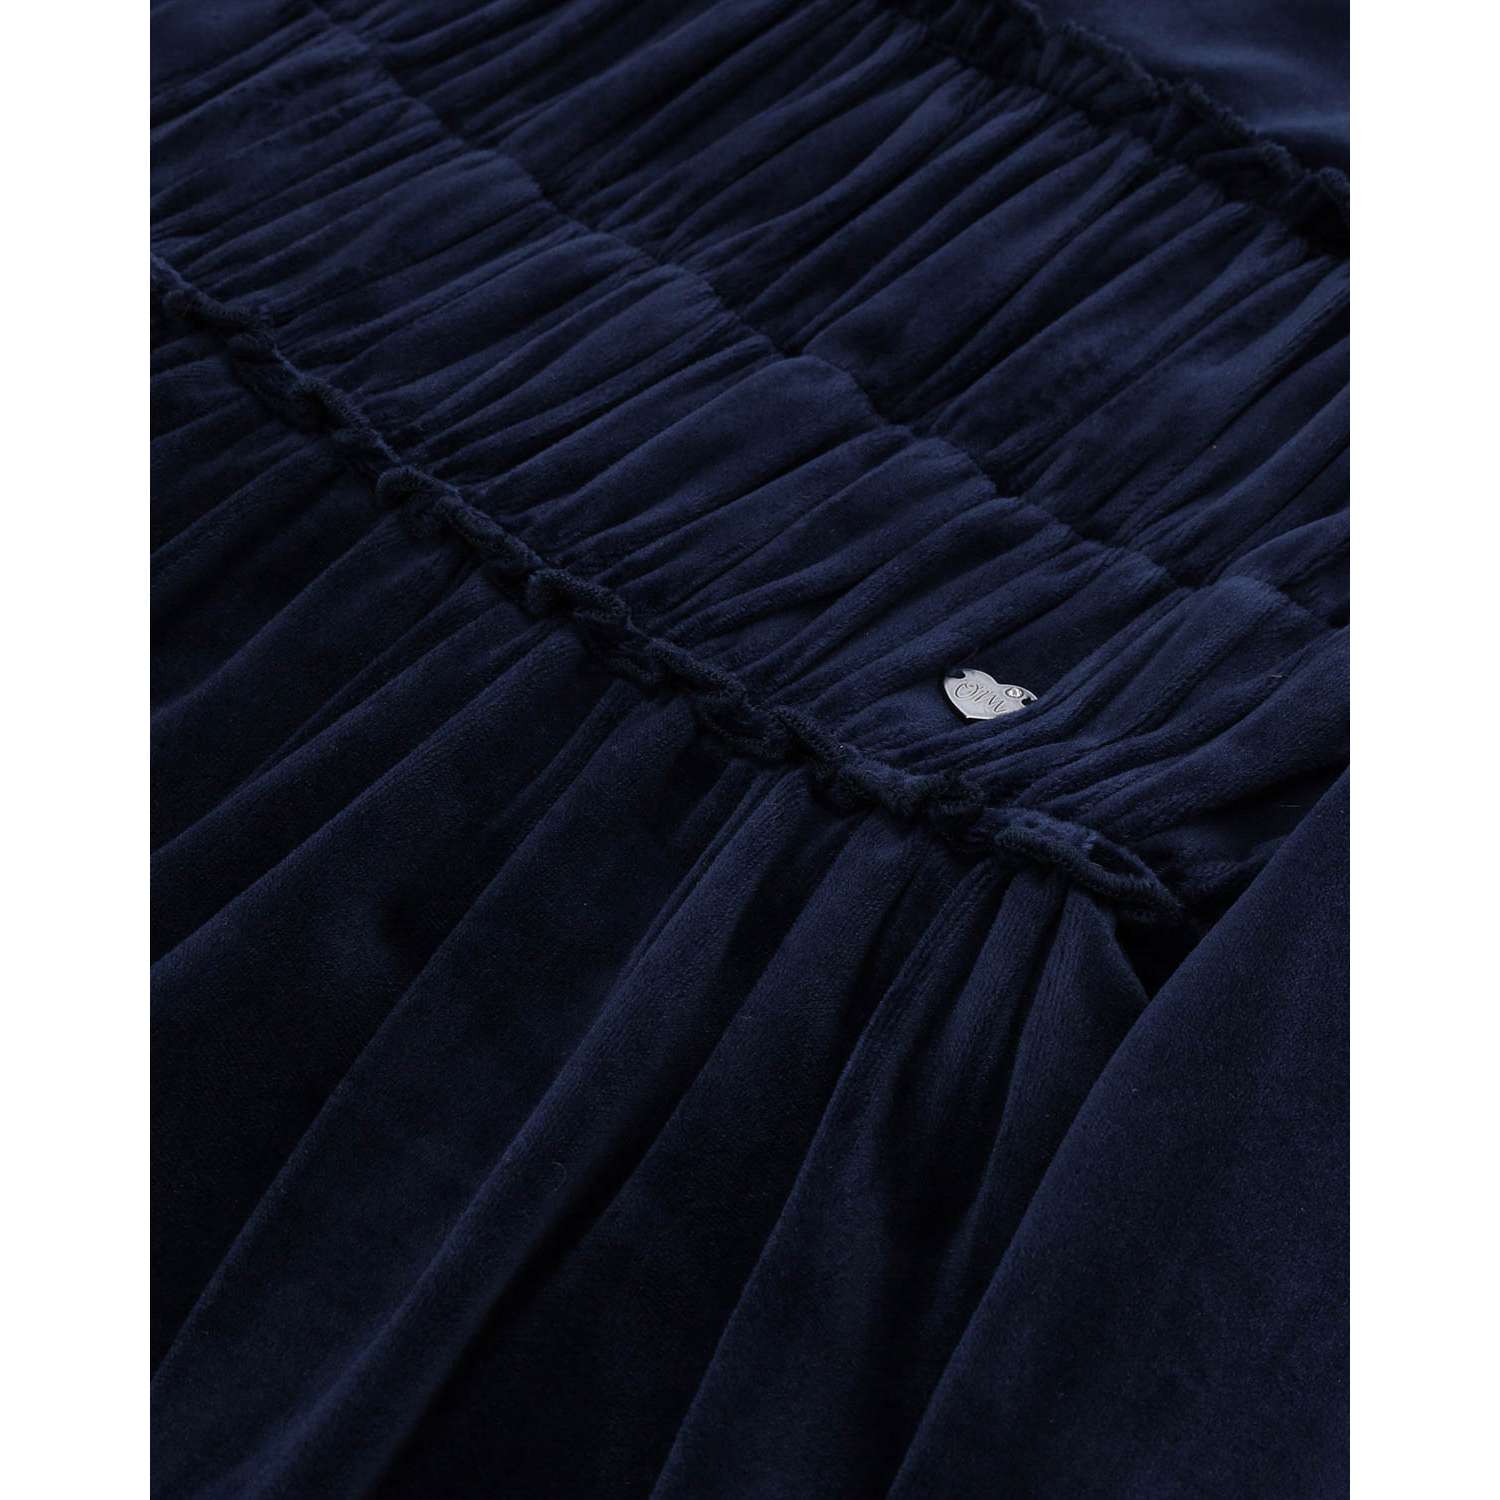 Платье ORIGINAL MARINES AZA3767F2_BLUE - фото 2